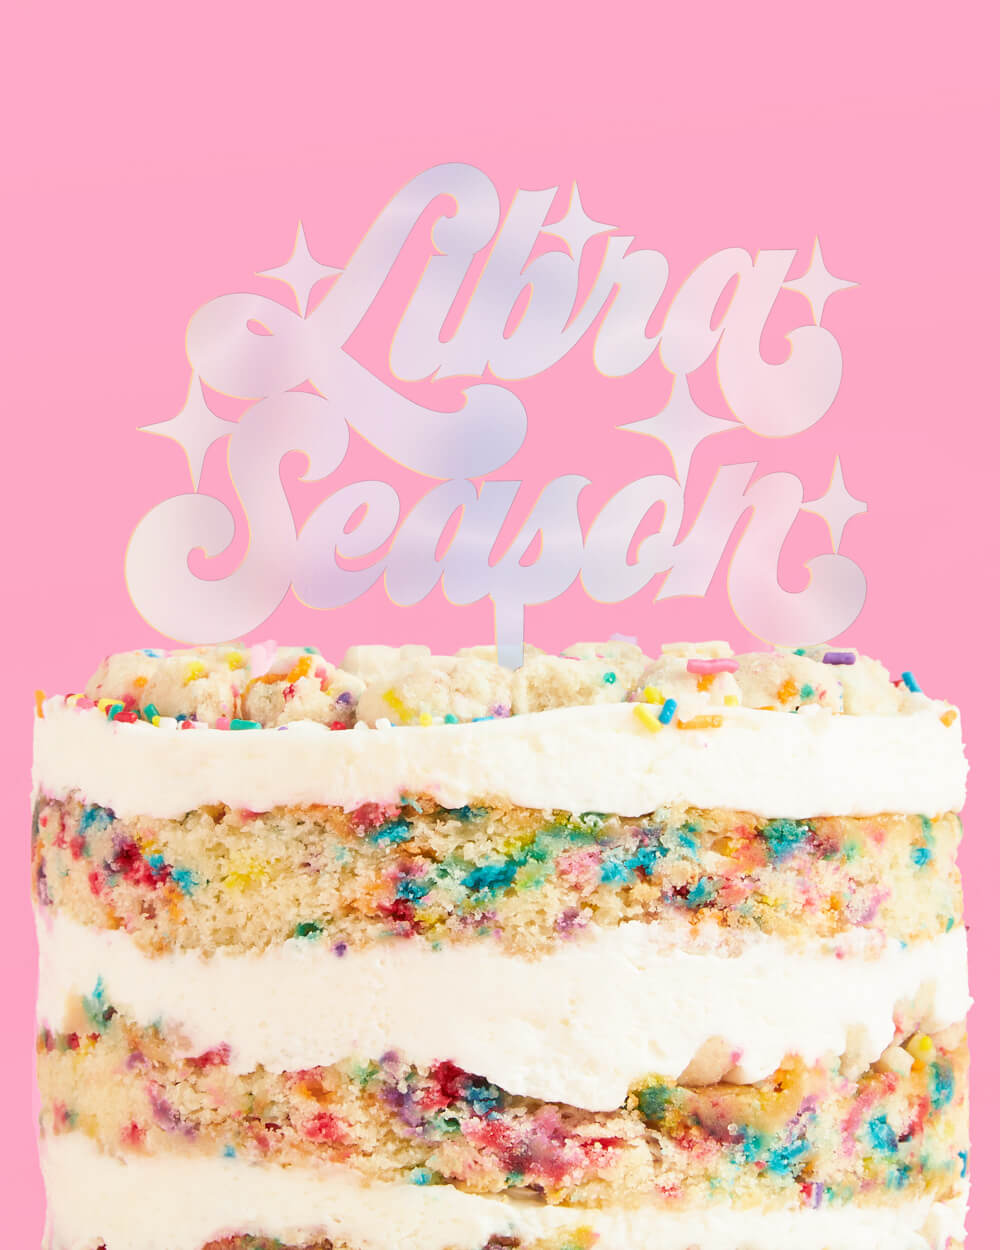 Libra Season Cake Topper - acrylic cake topper